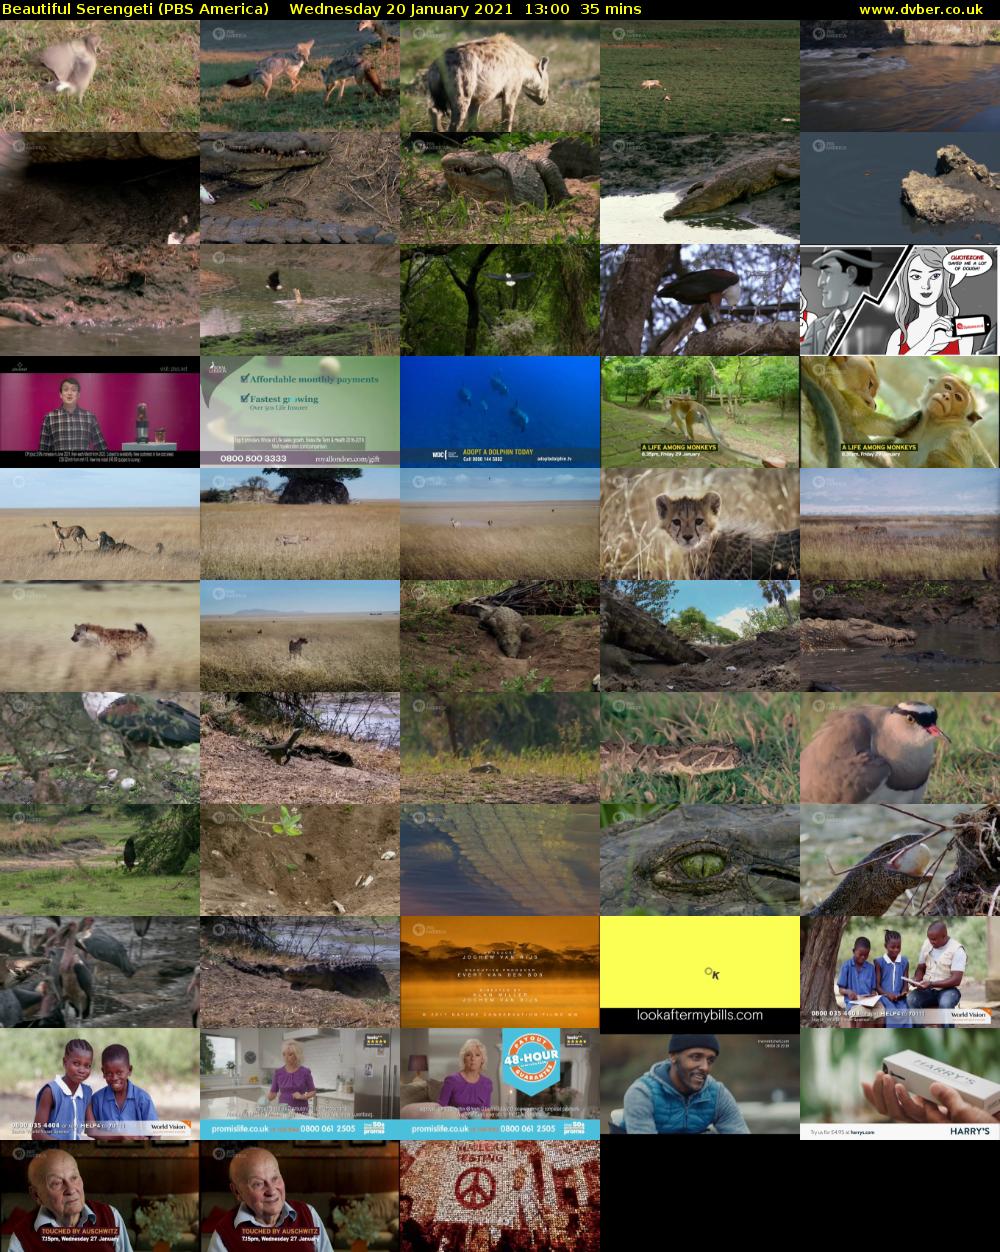 Beautiful Serengeti (PBS America) Wednesday 20 January 2021 13:00 - 13:35